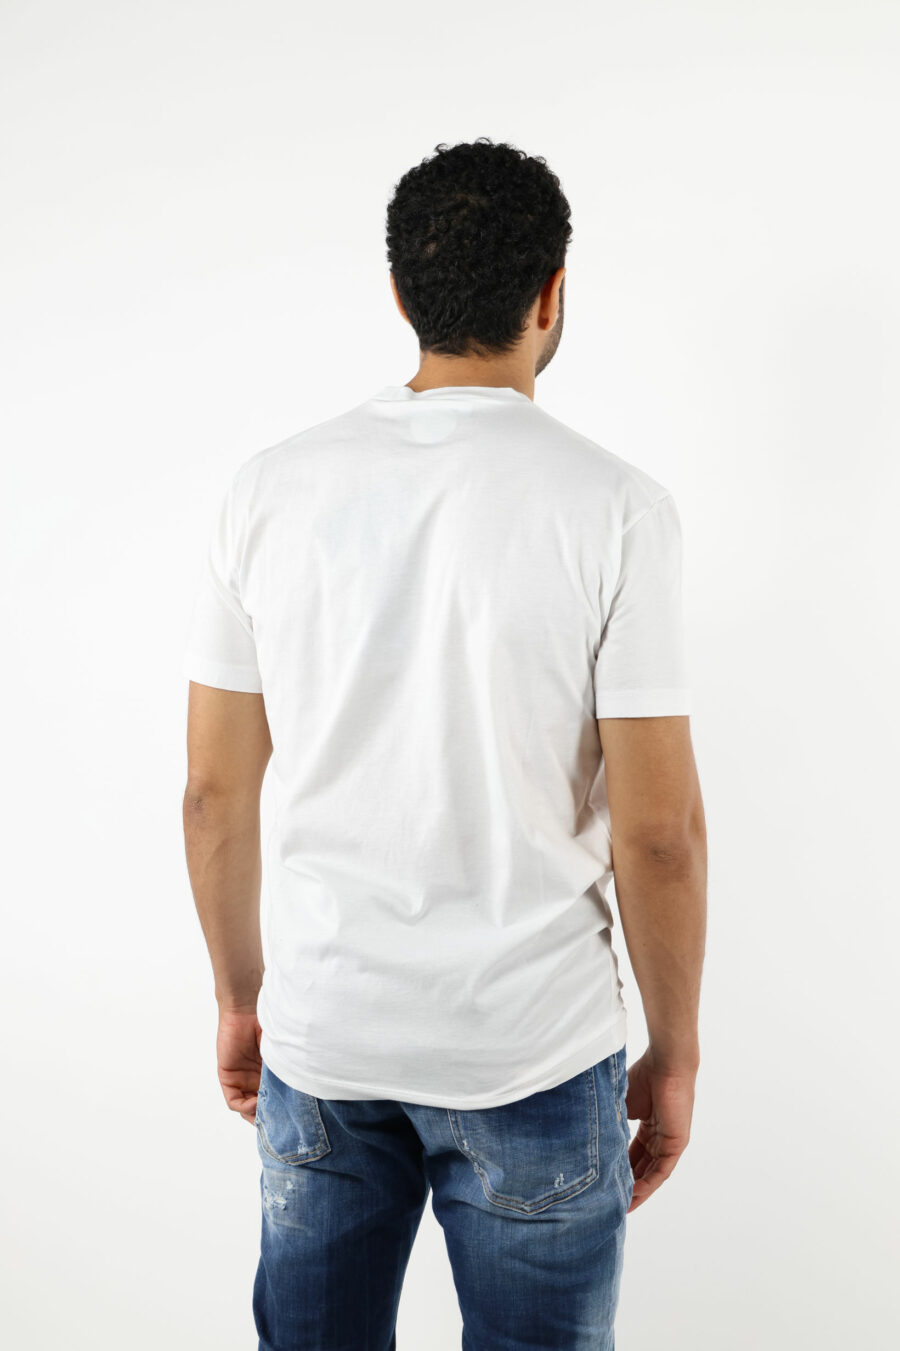 Camiseta blanca con maxilogo multicolor retro - 111183